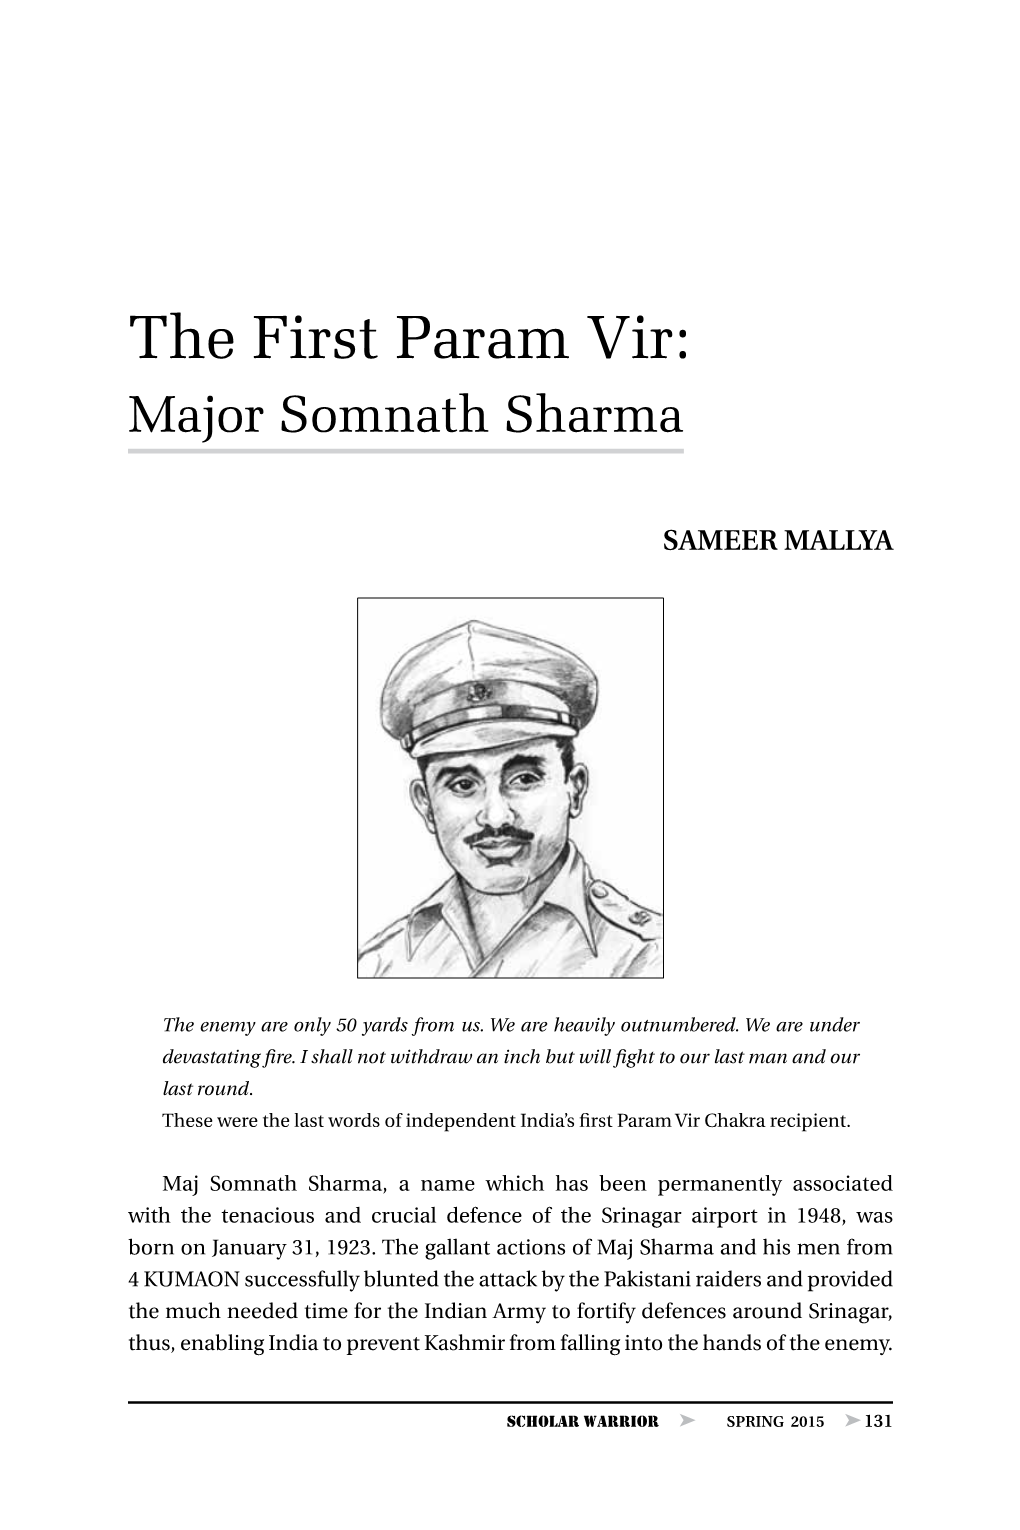 The First Param Vir: Major Somnath Sharma, by Sameer Mallya